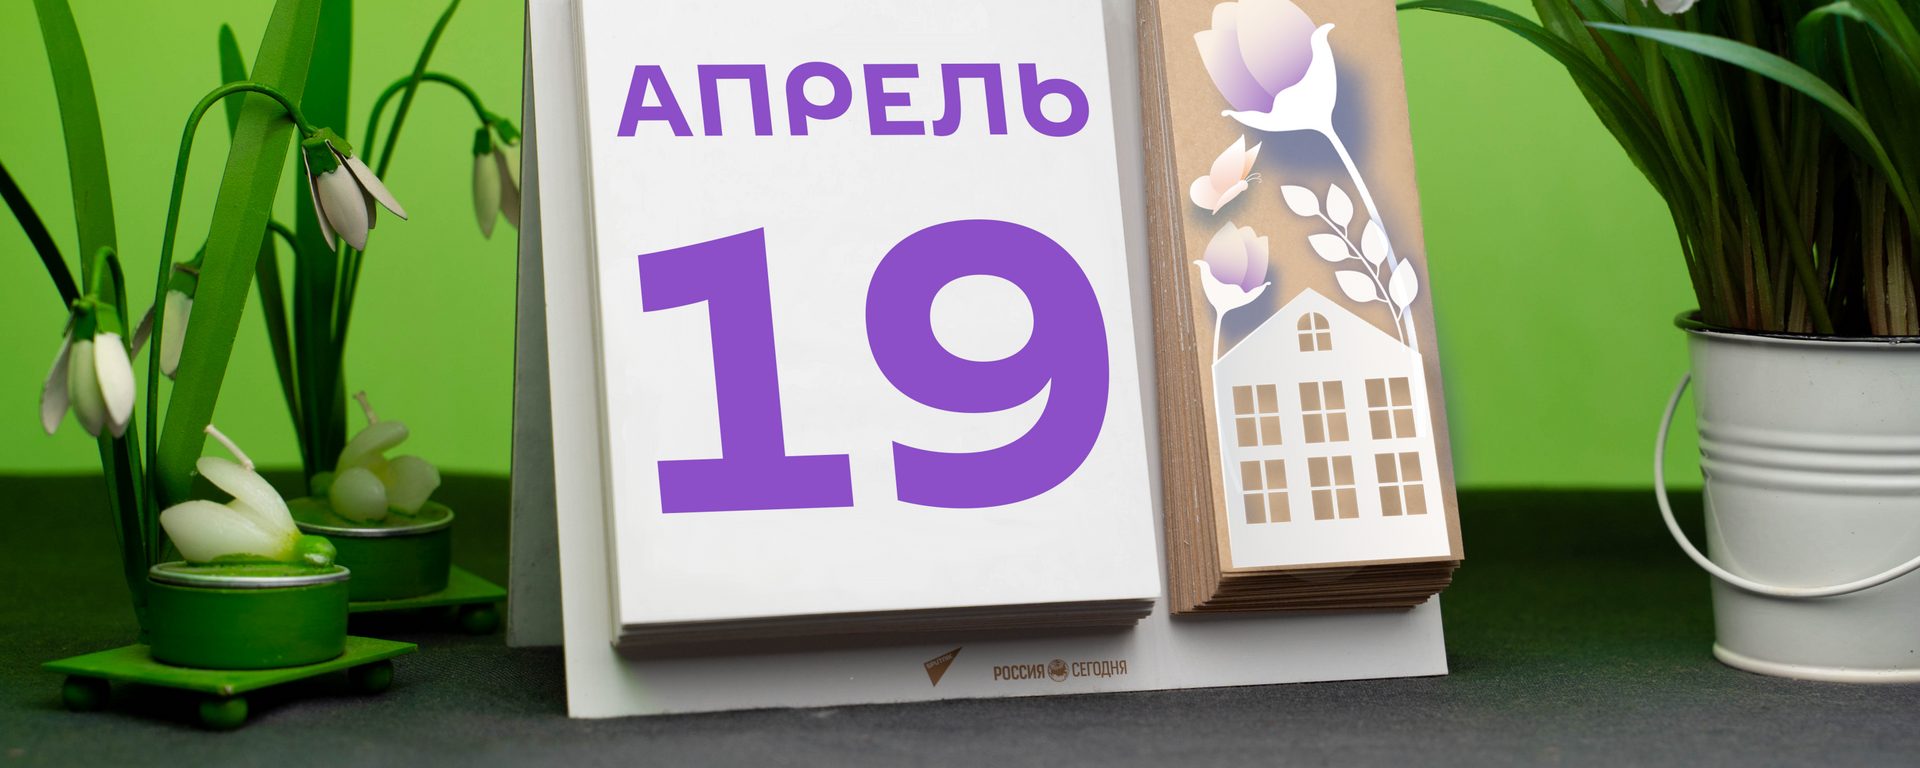 День 19 апреля - Sputnik Тоҷикистон, 1920, 19.04.2021